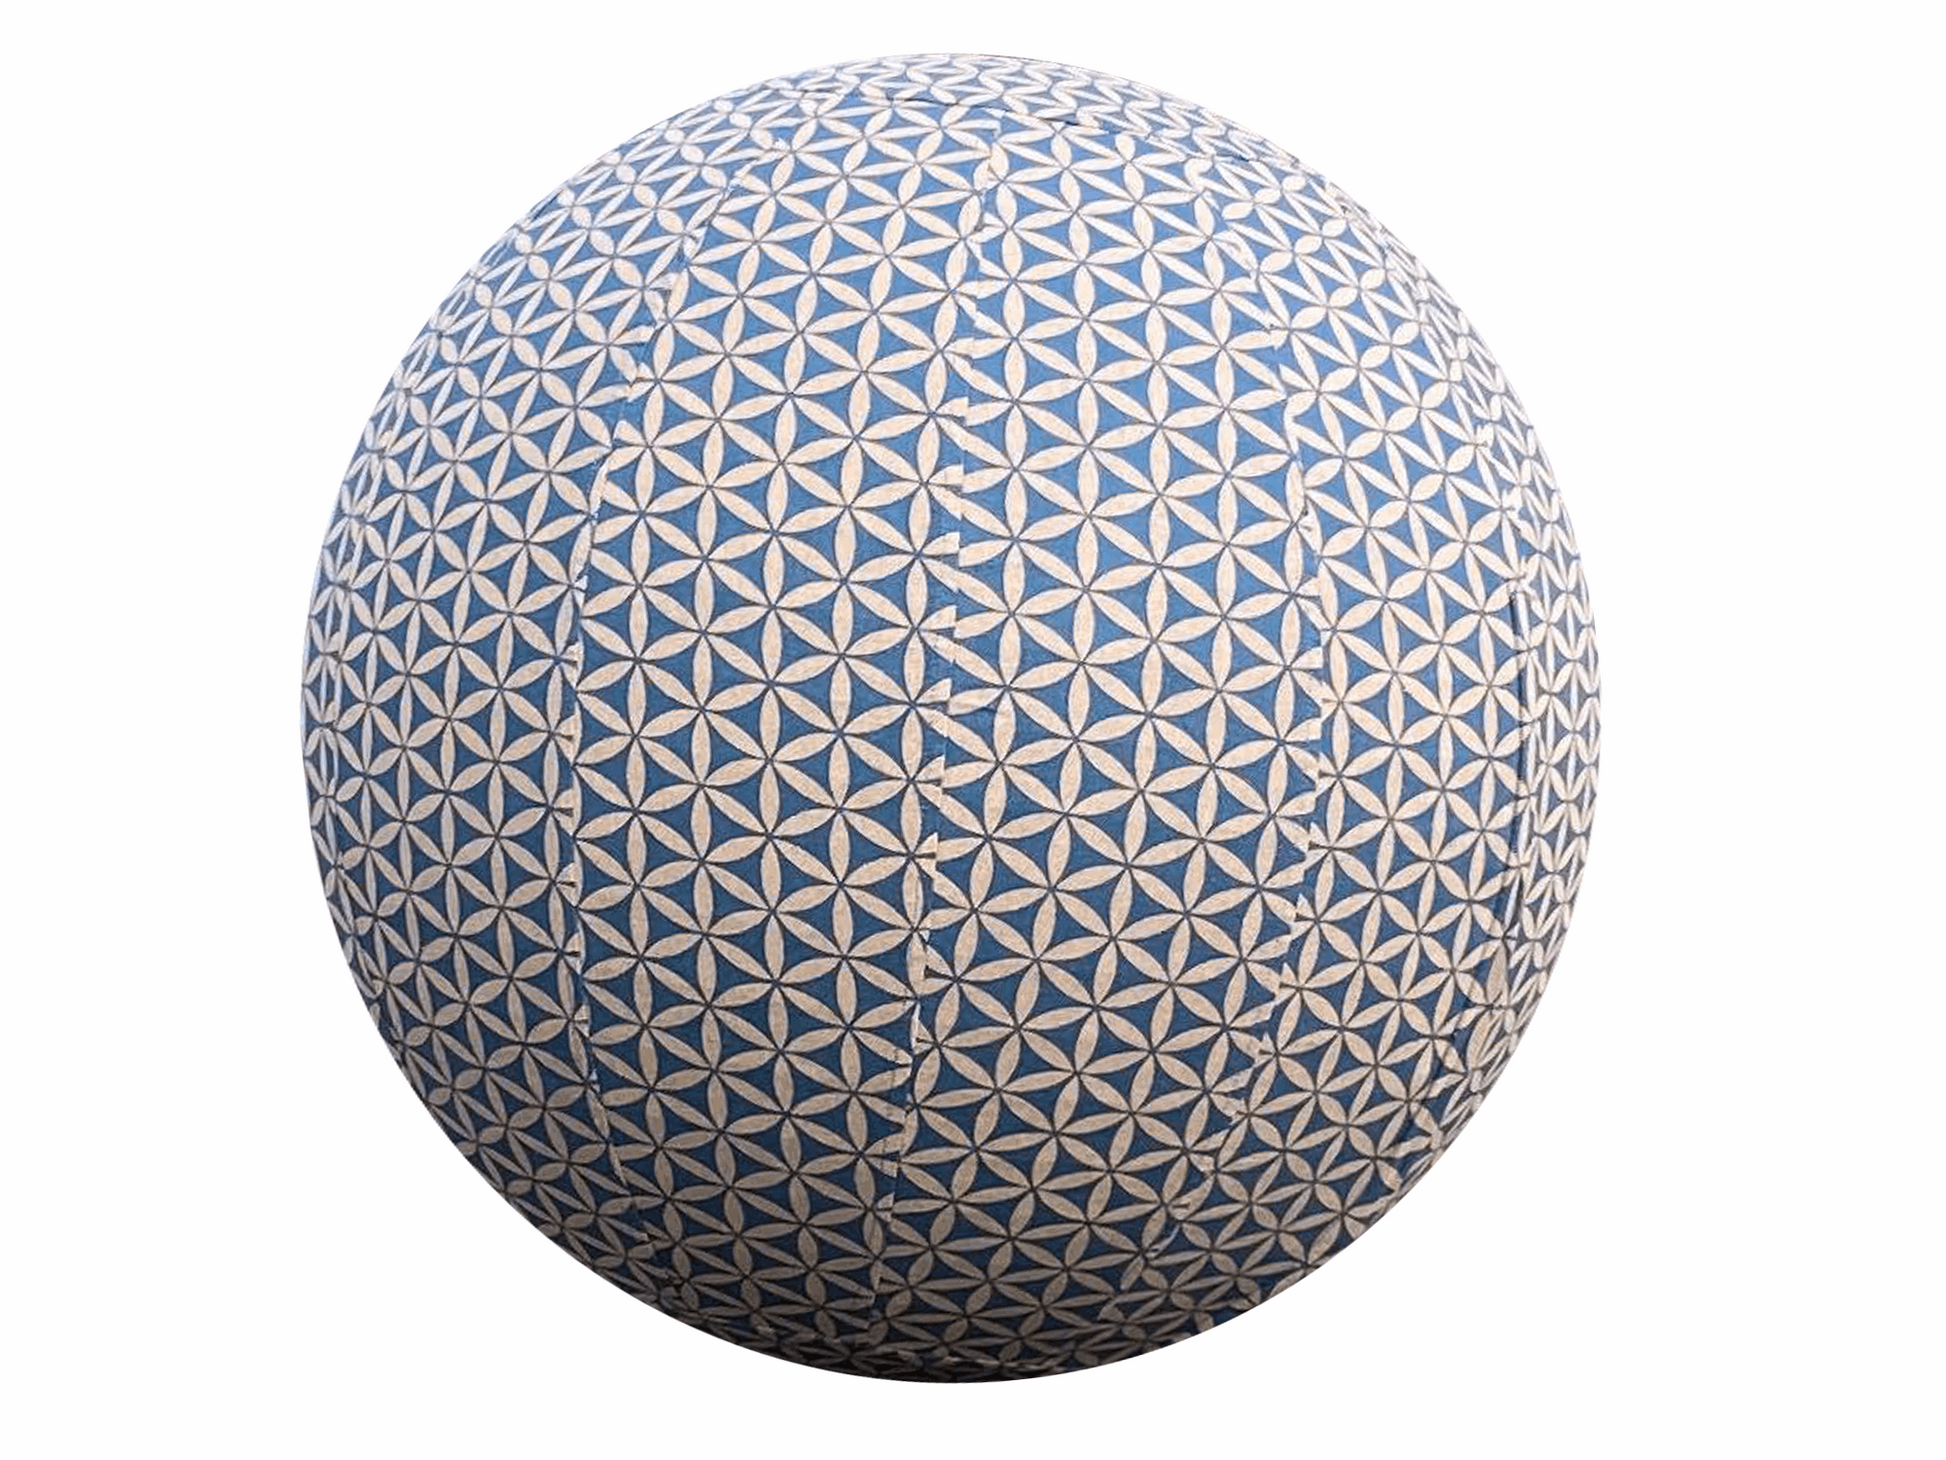 65cm Balance Ball / Yoga Ball Cover: Grey-Blue Flower of Life